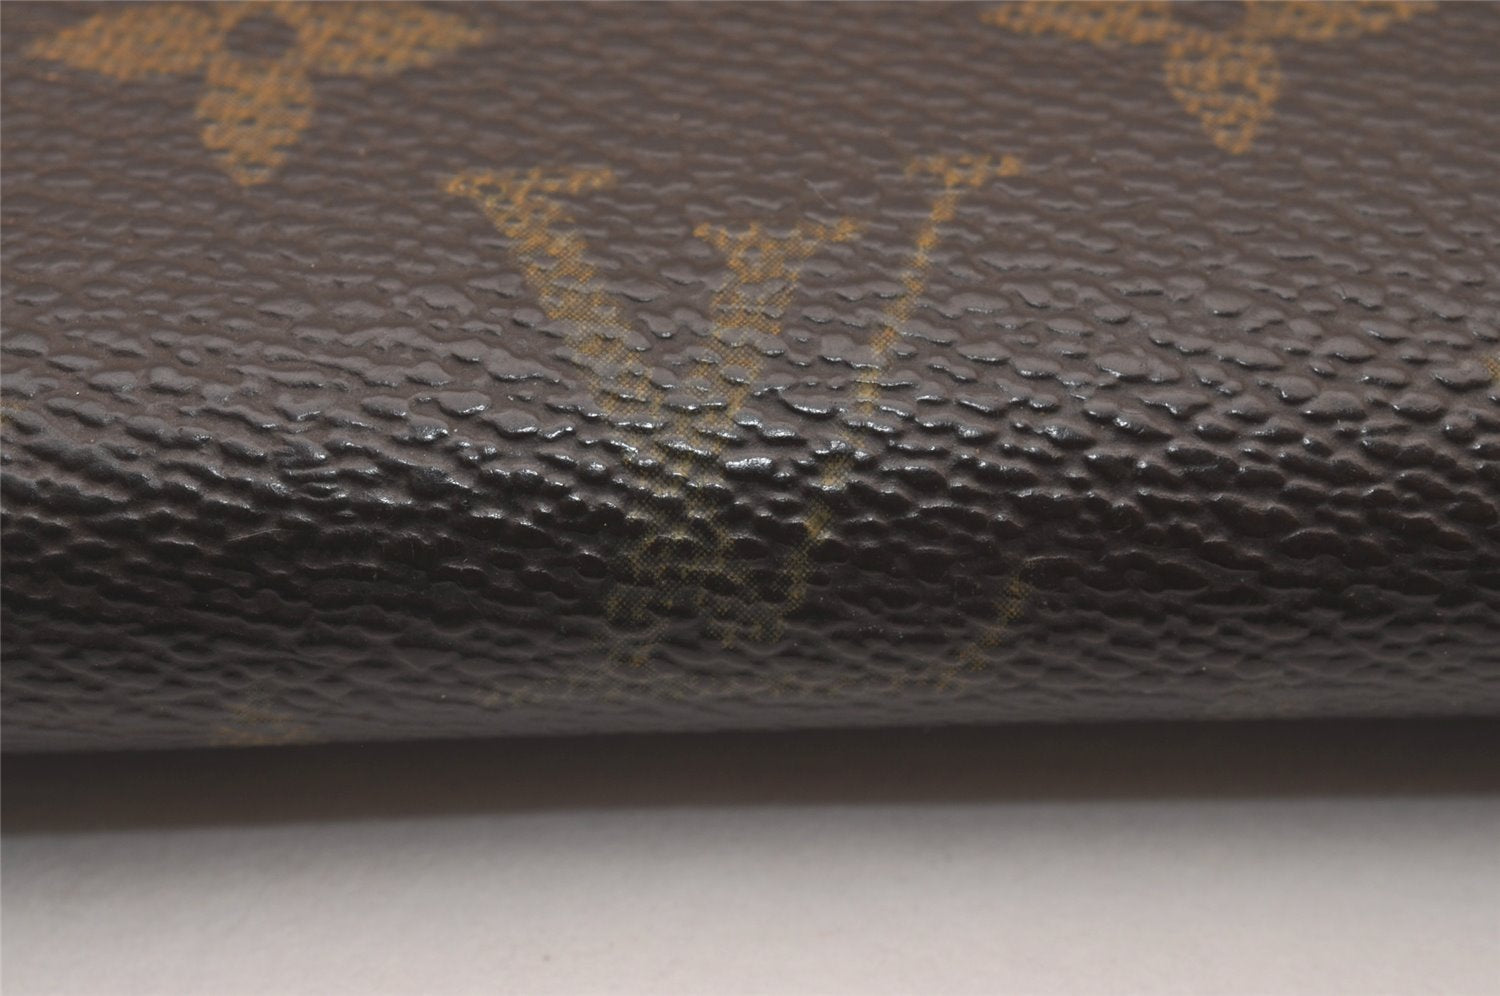 Authentic Louis Vuitton Monogram Porte Tresor International M61215 Wallet 1386I